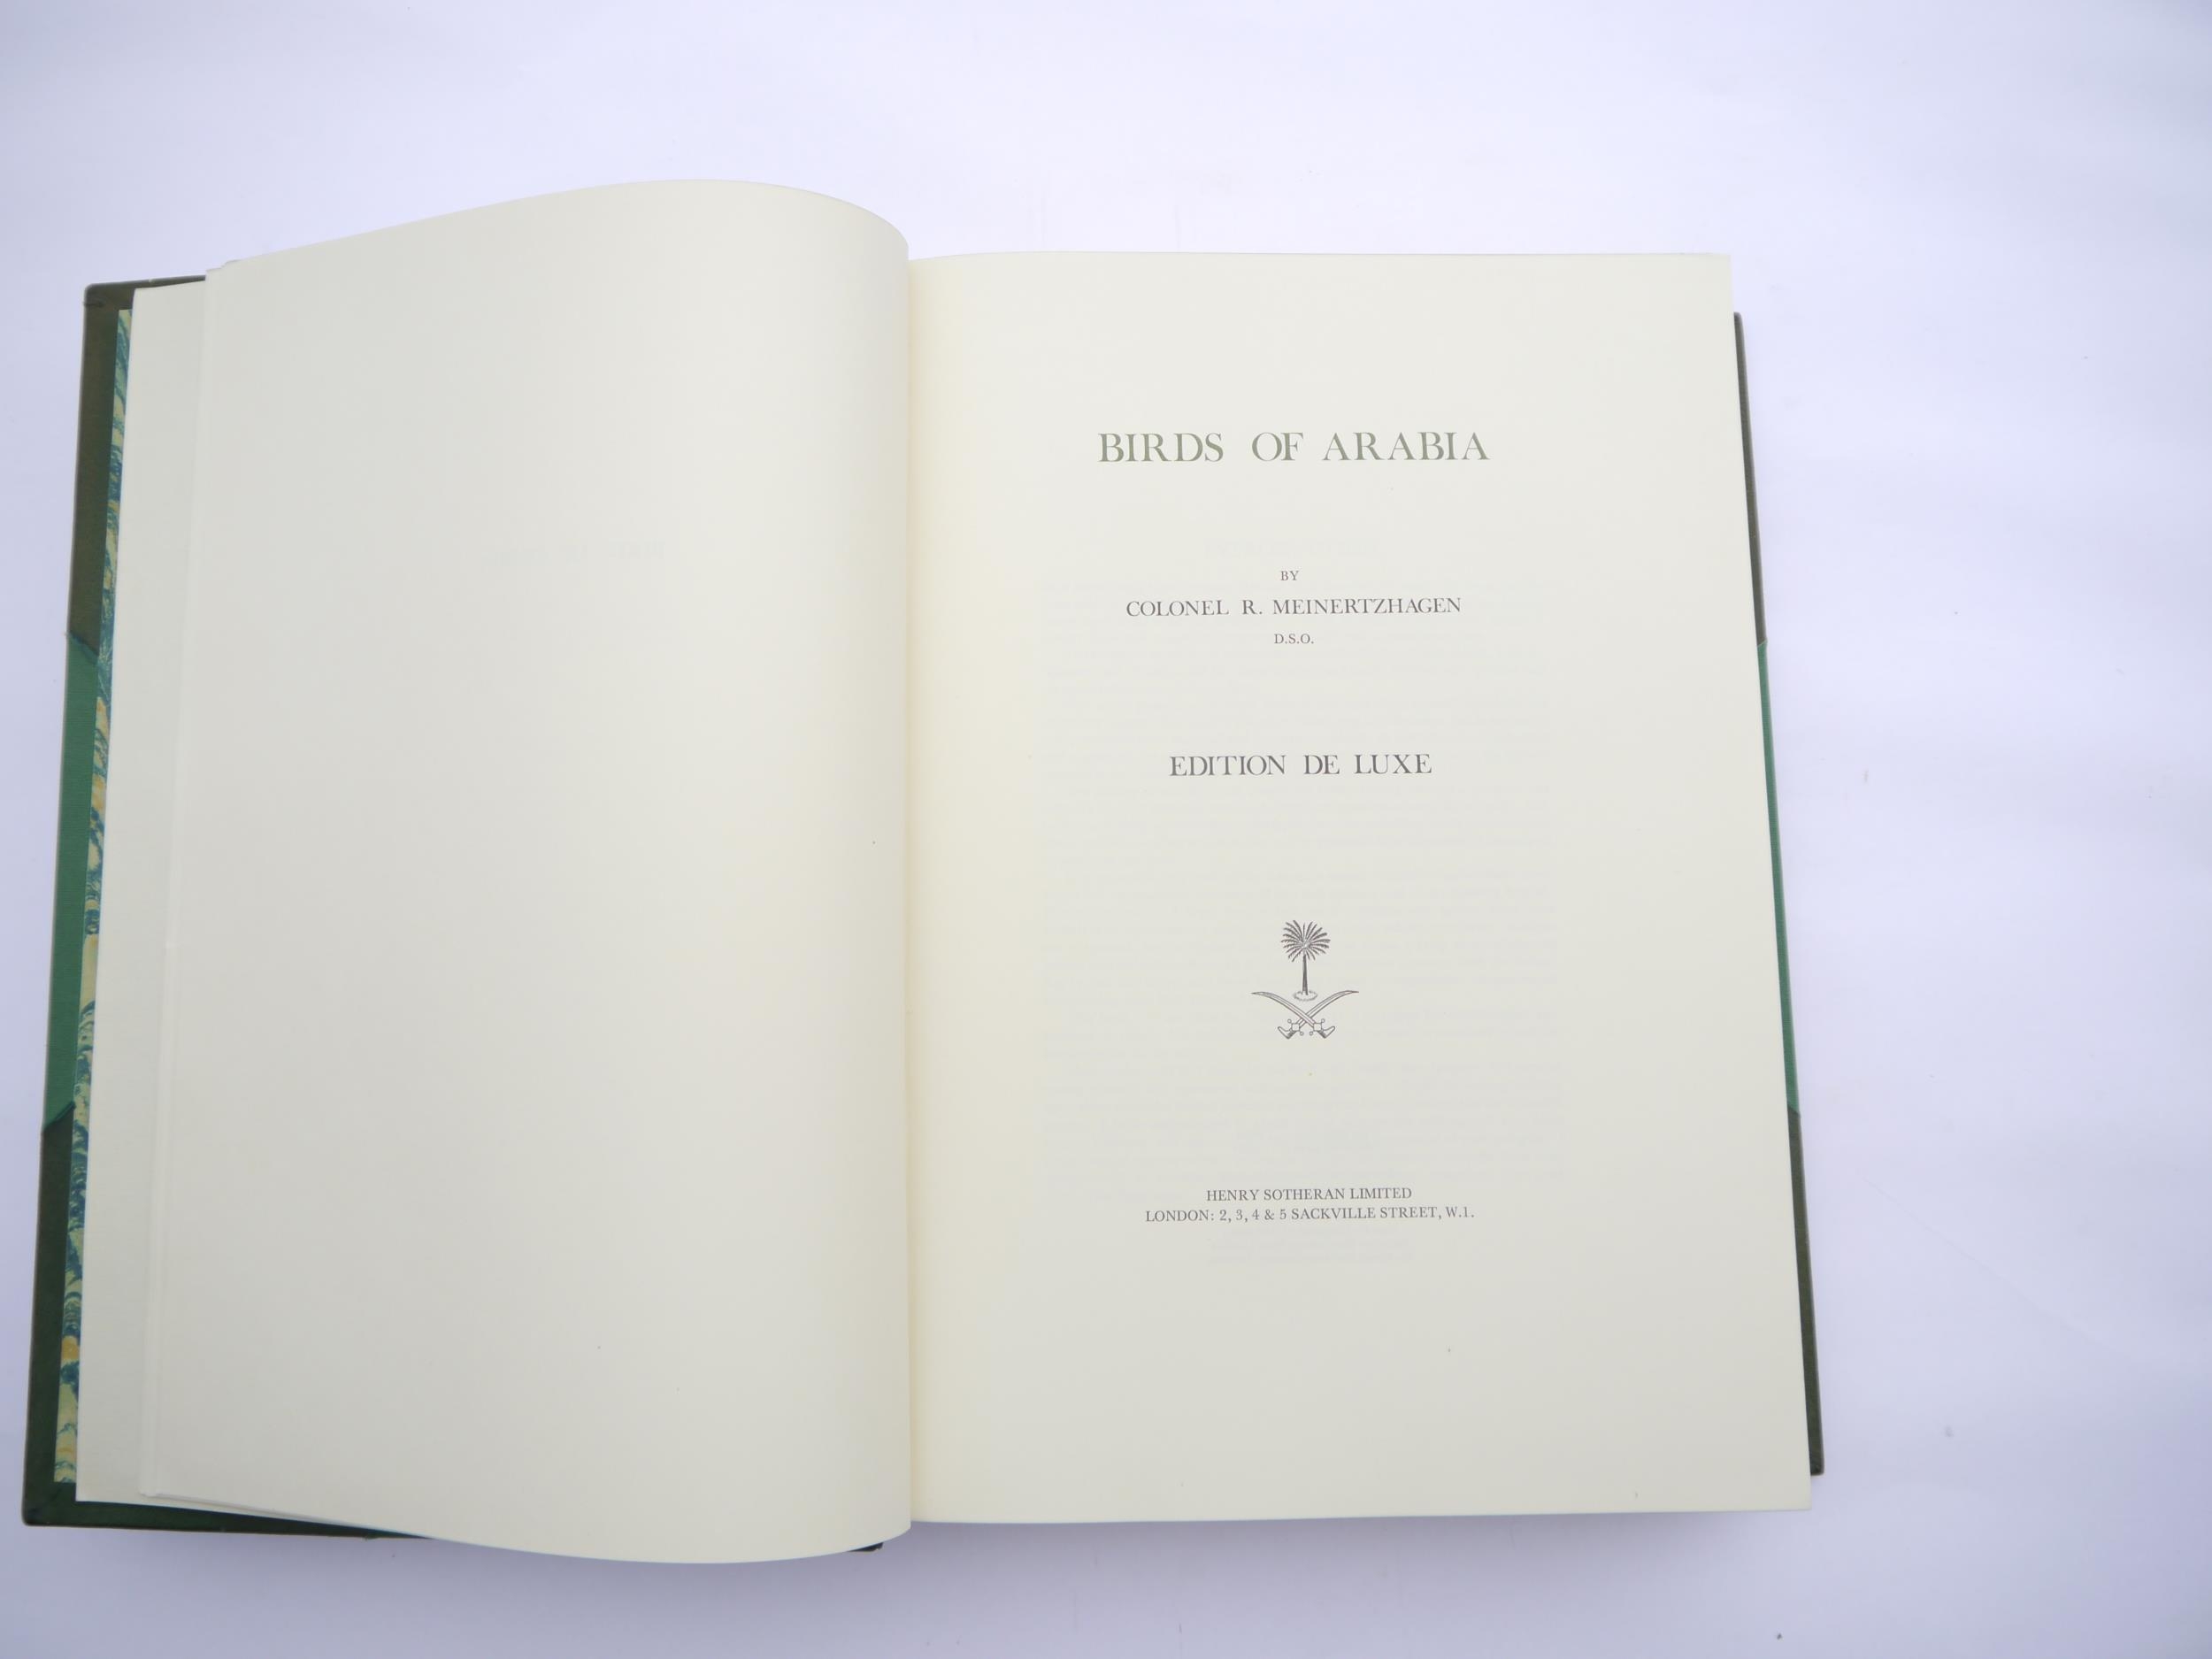 Colonel R. Meinertzhagen: 'Birds of Arabia', London, Henry Sotheran, 1980, edition de Luxe, one of - Image 4 of 7